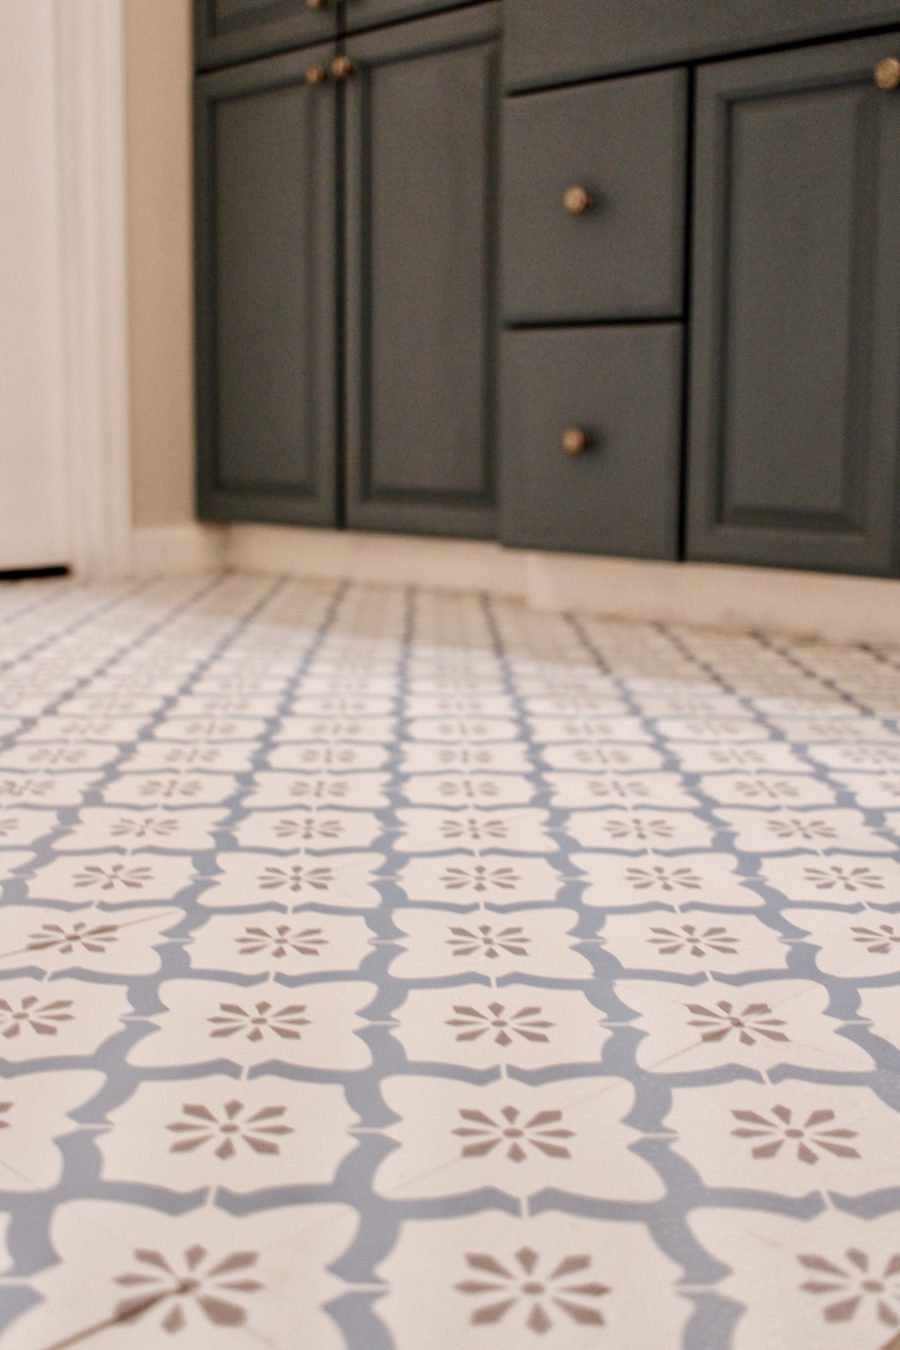 FloorPops Peel & Stick Vinyl Floor Tiles Review & Tips | Home Decor Blog